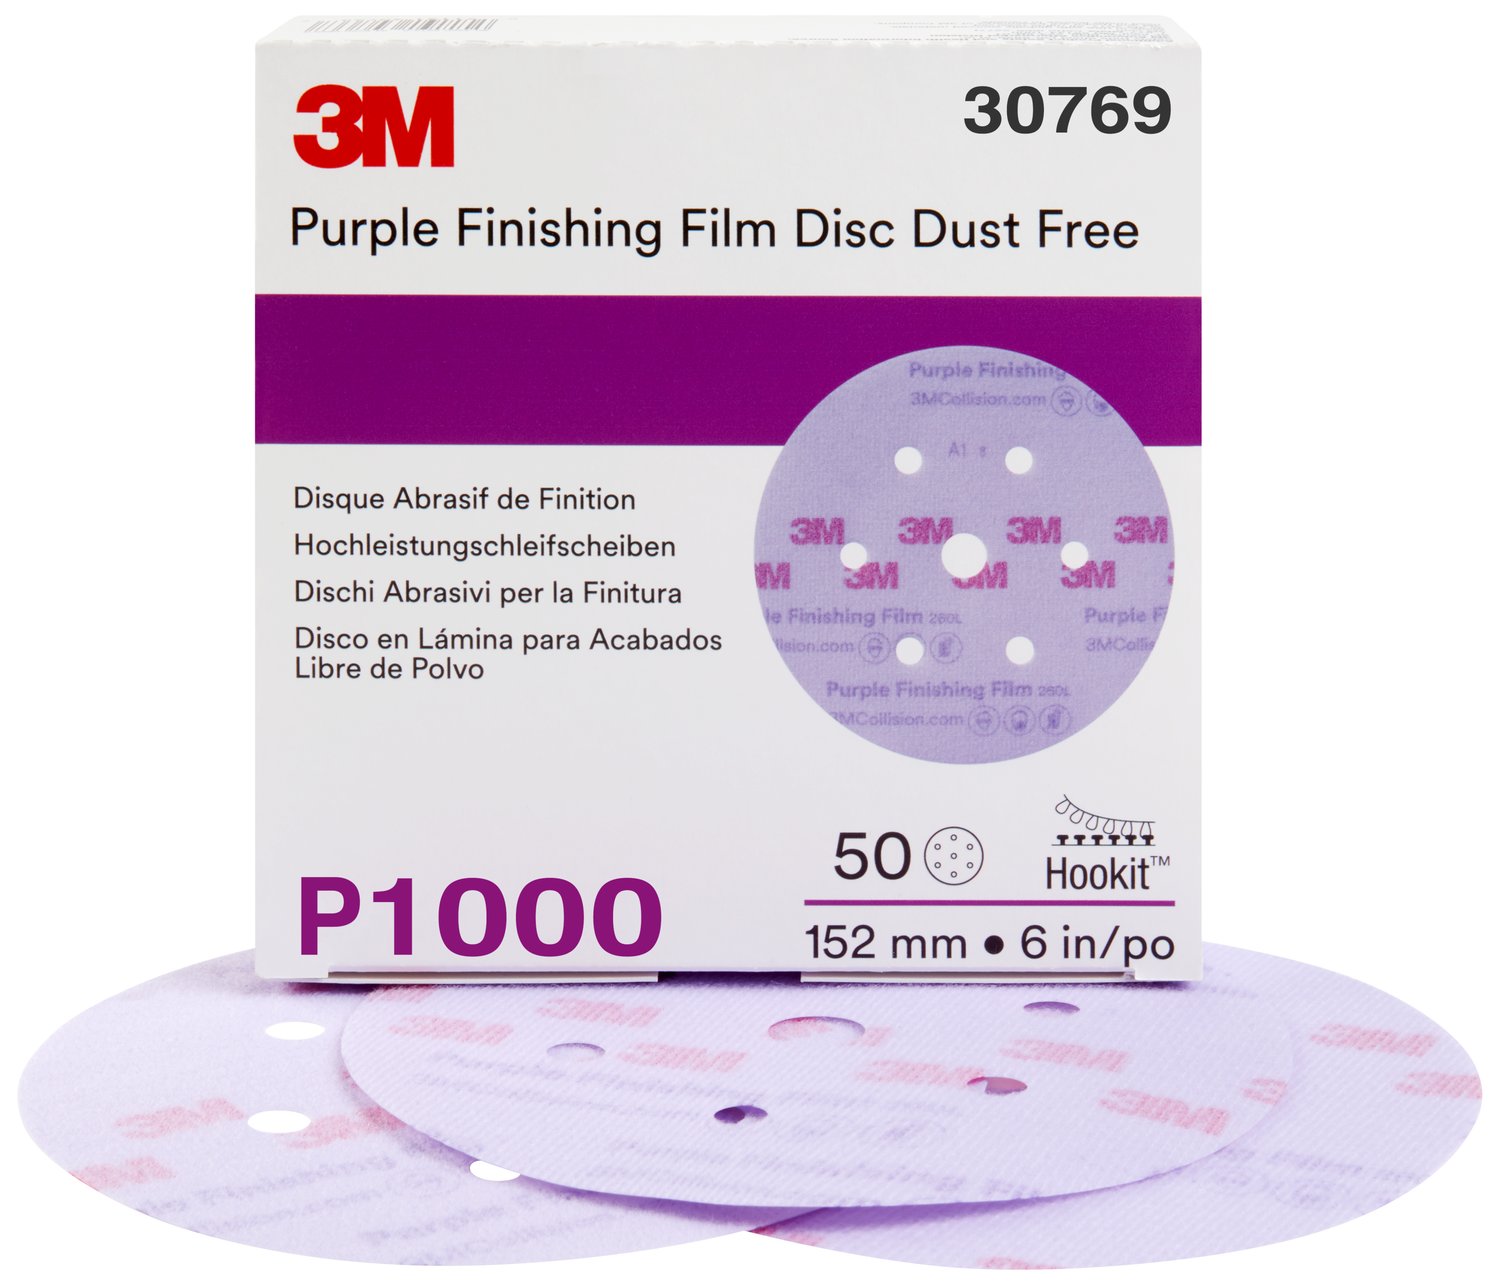 7100122767 - 3M Hookit Purple Finishing Film Abrasive Disc 260L, 30769, 6 in, Dust
Free, P1000, 50 discs per carton, 4 cartons per case